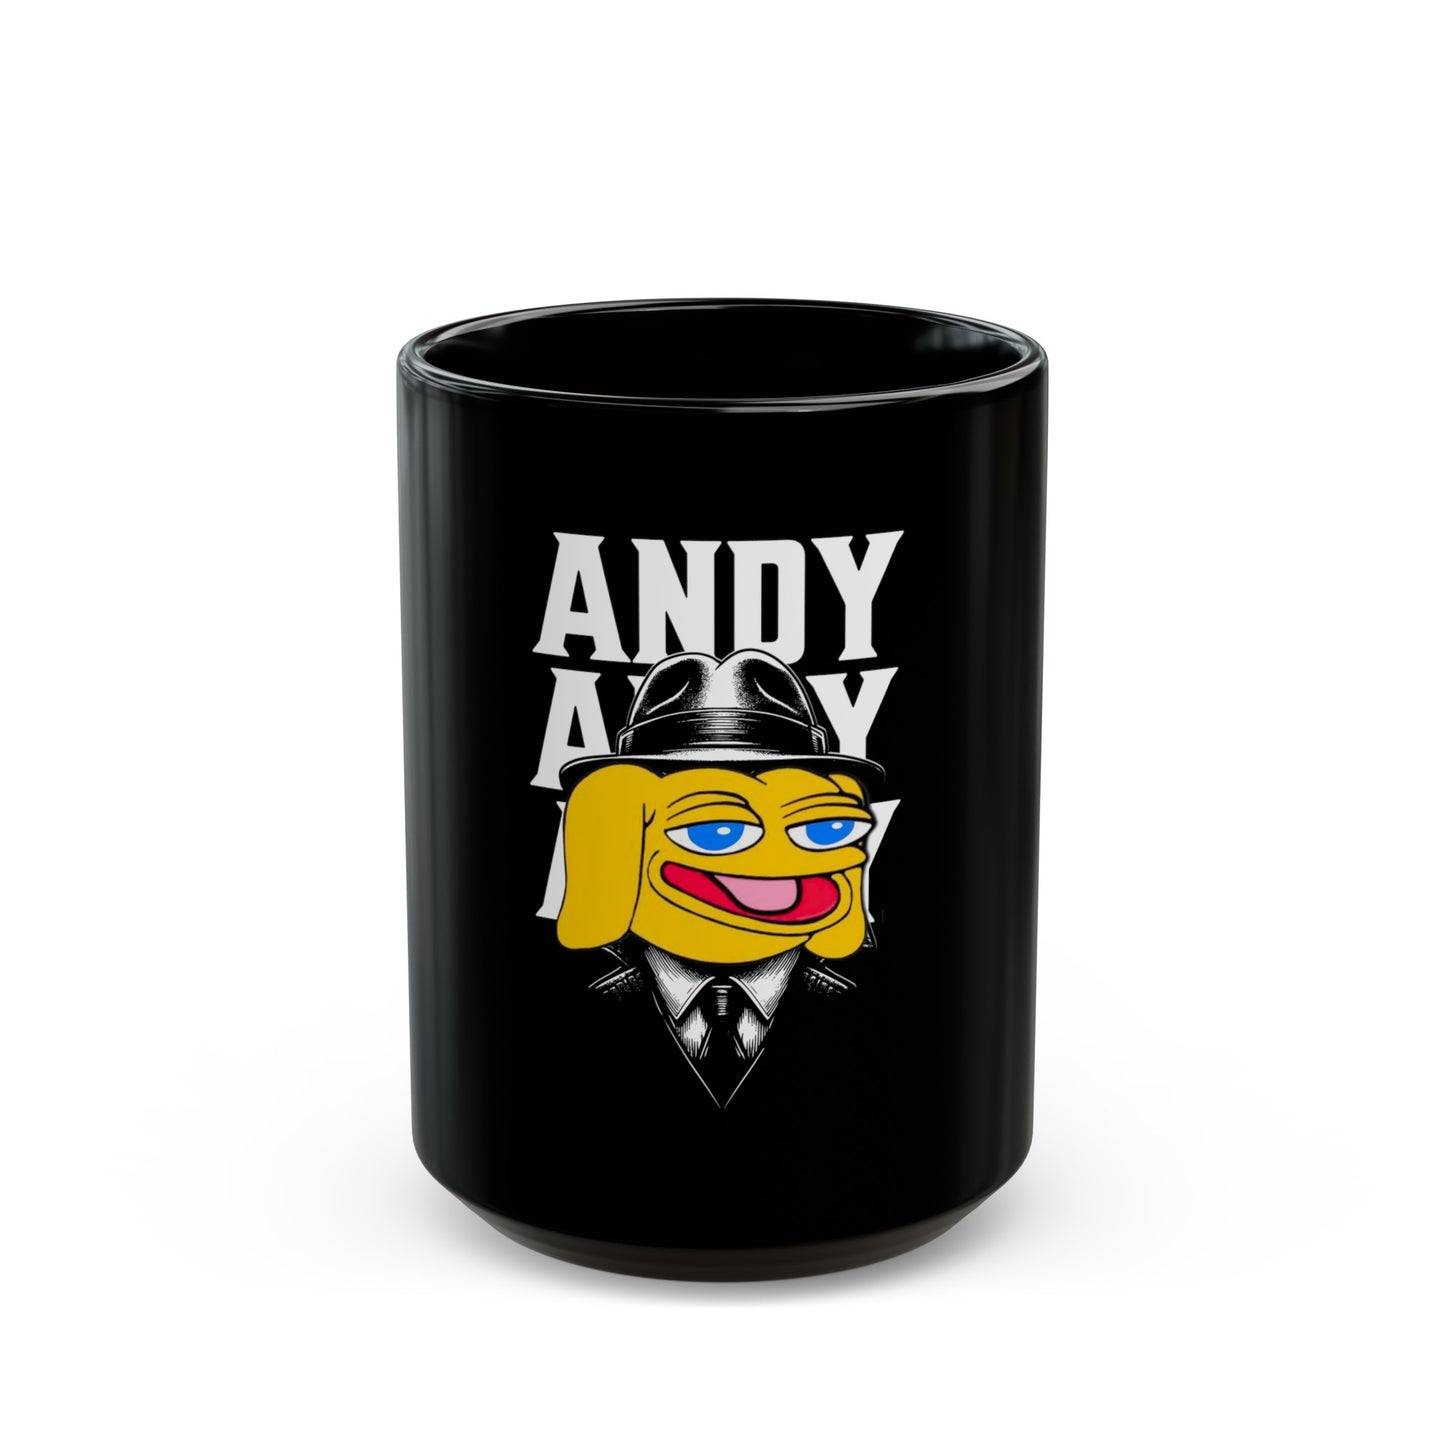 ANDY Boss Black Mug